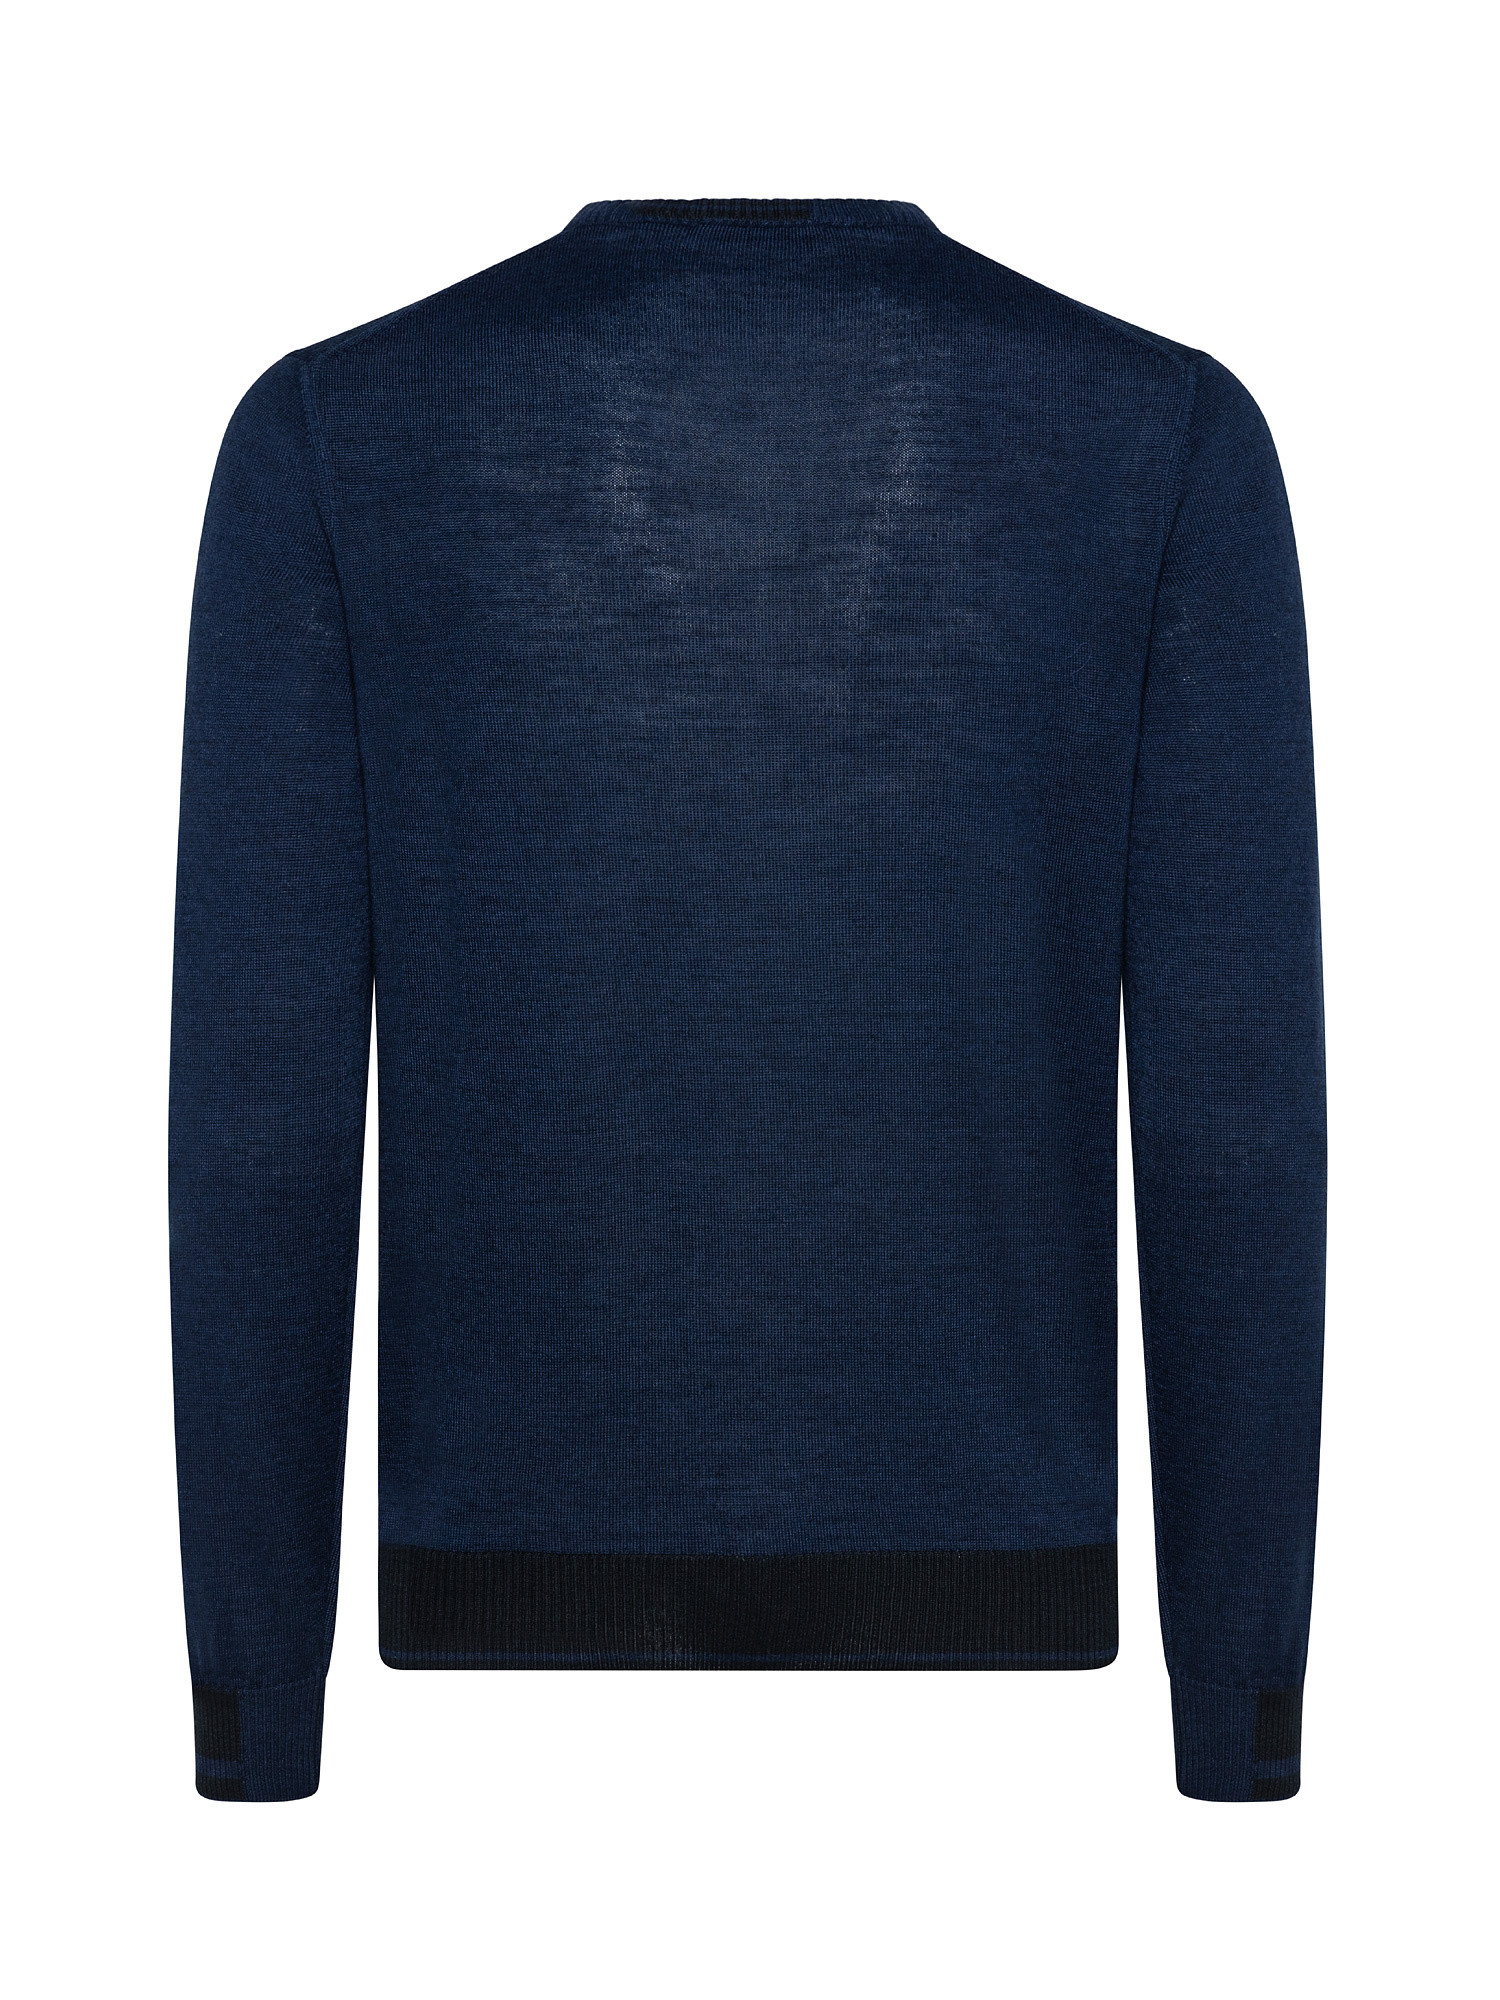 Maglia girocollo in lana con contrasti, Blu, large